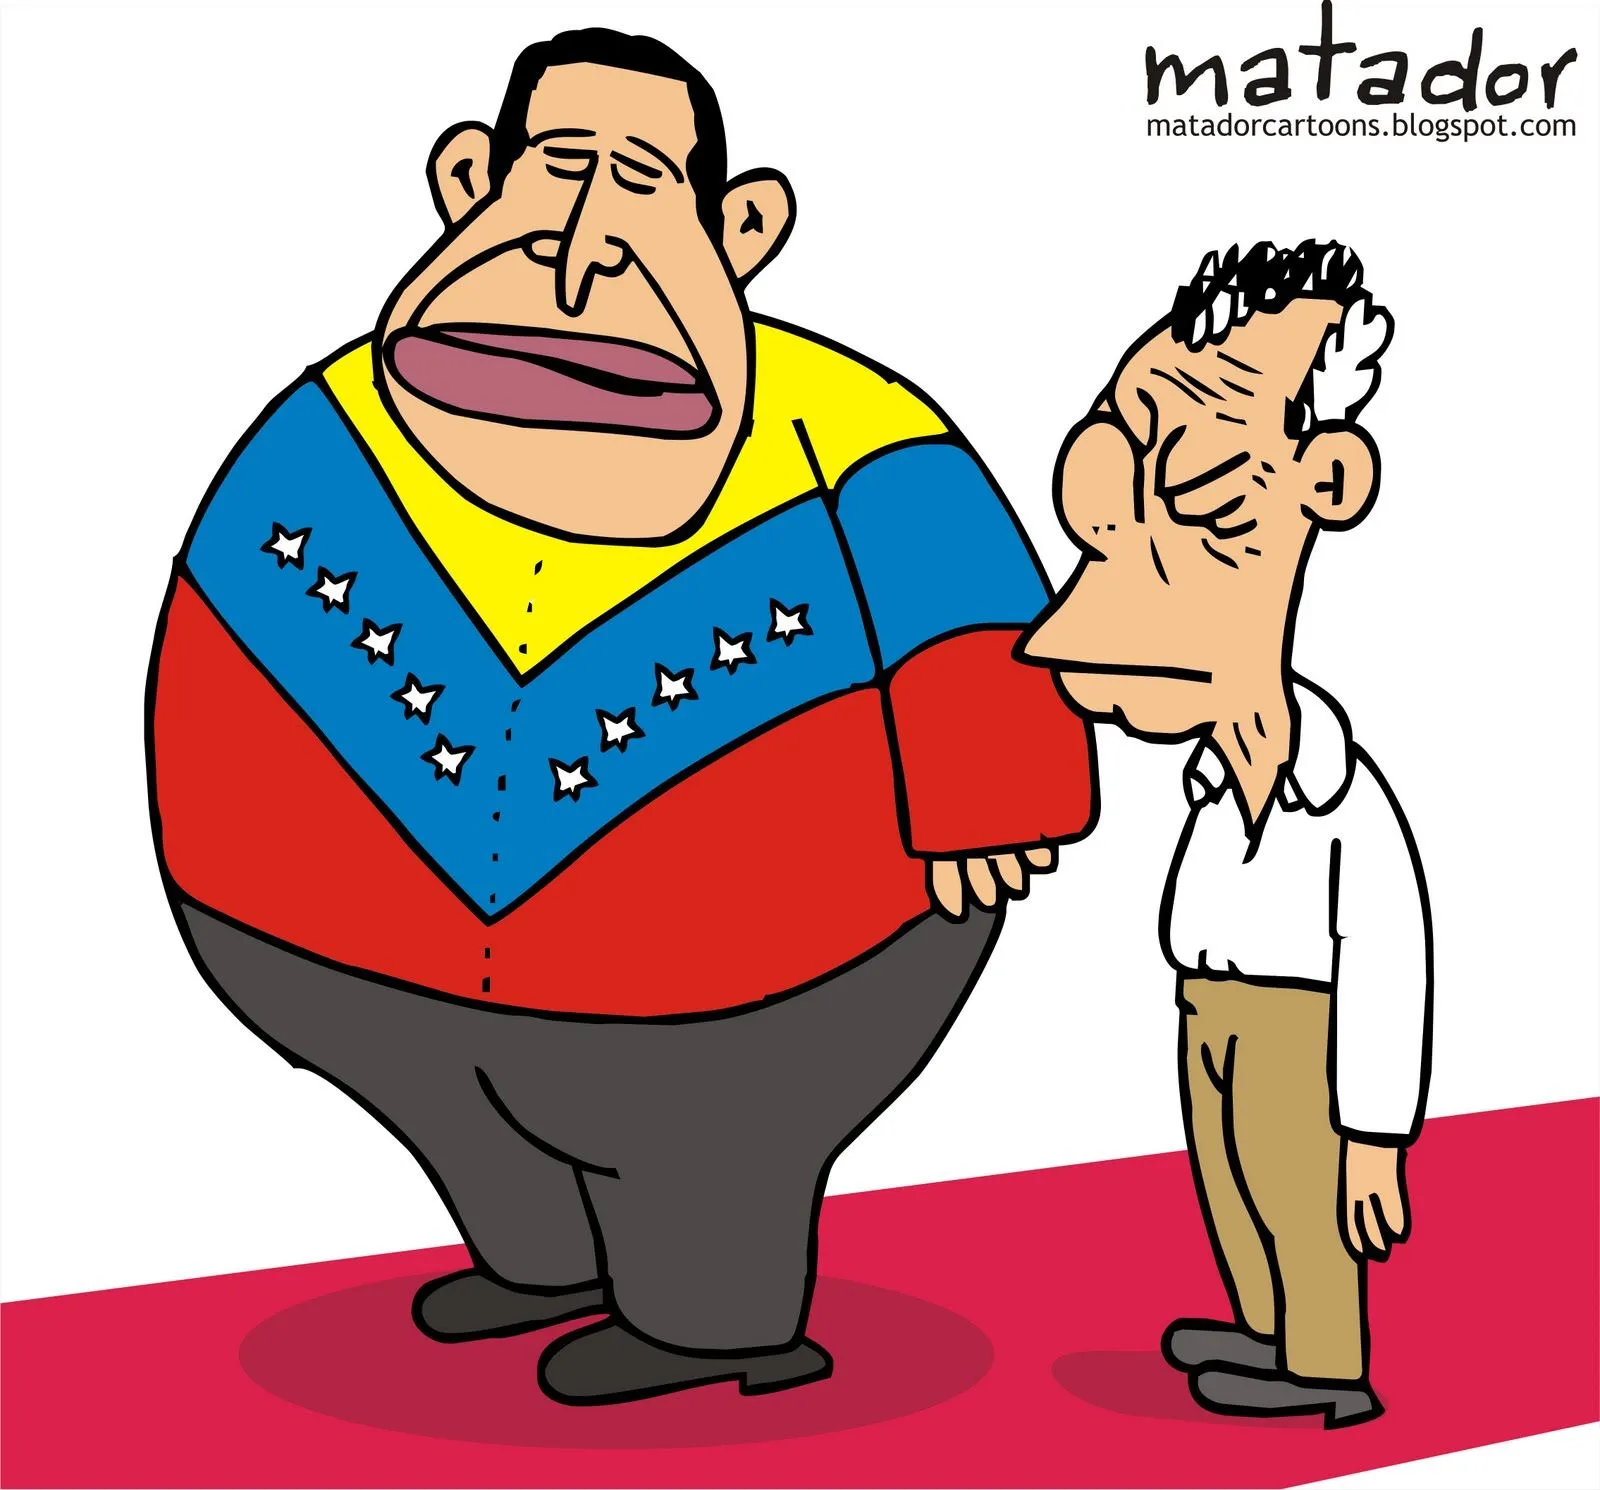 Fotos caricaturas gordos - Imagui